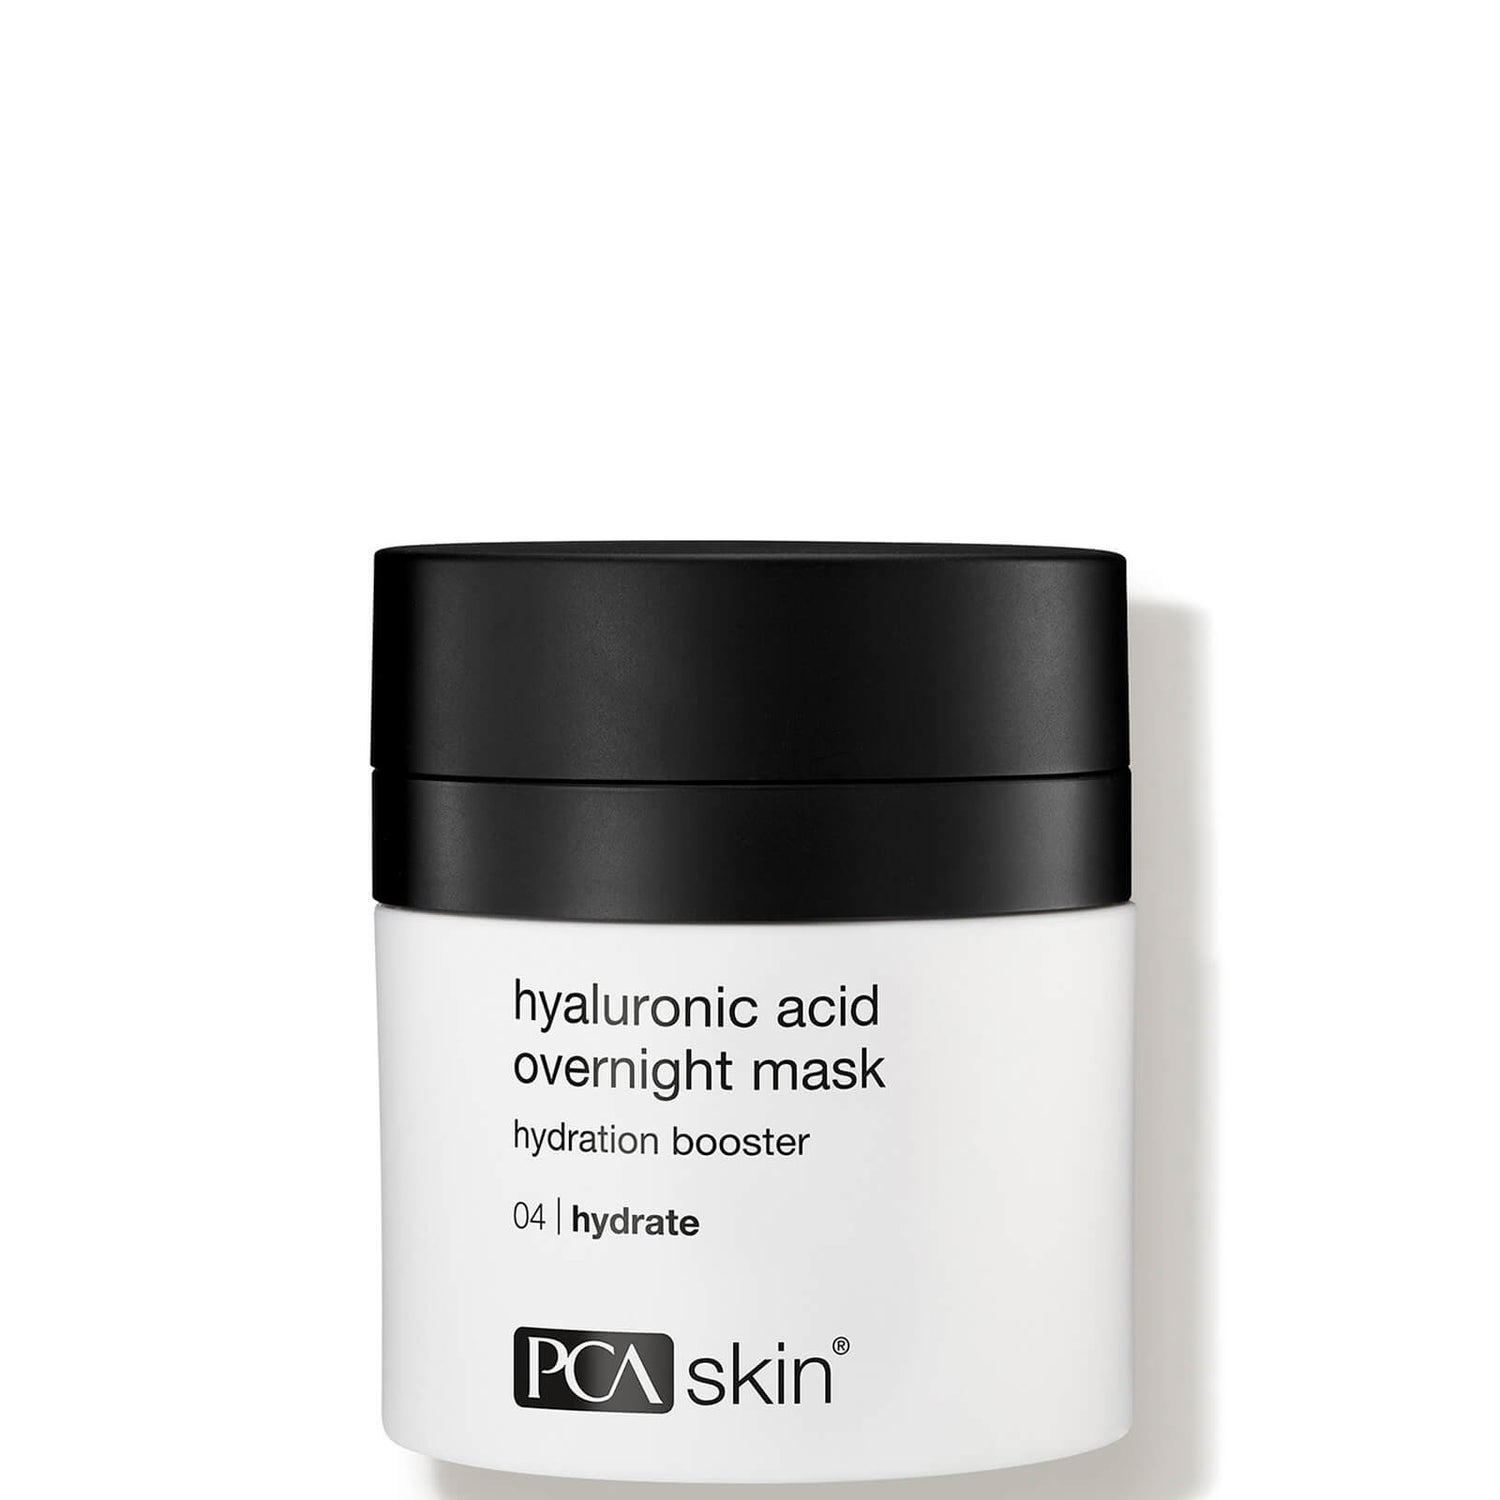 PCA Skin Hyaluronic Acid Overnight Mask 1.8 oz.